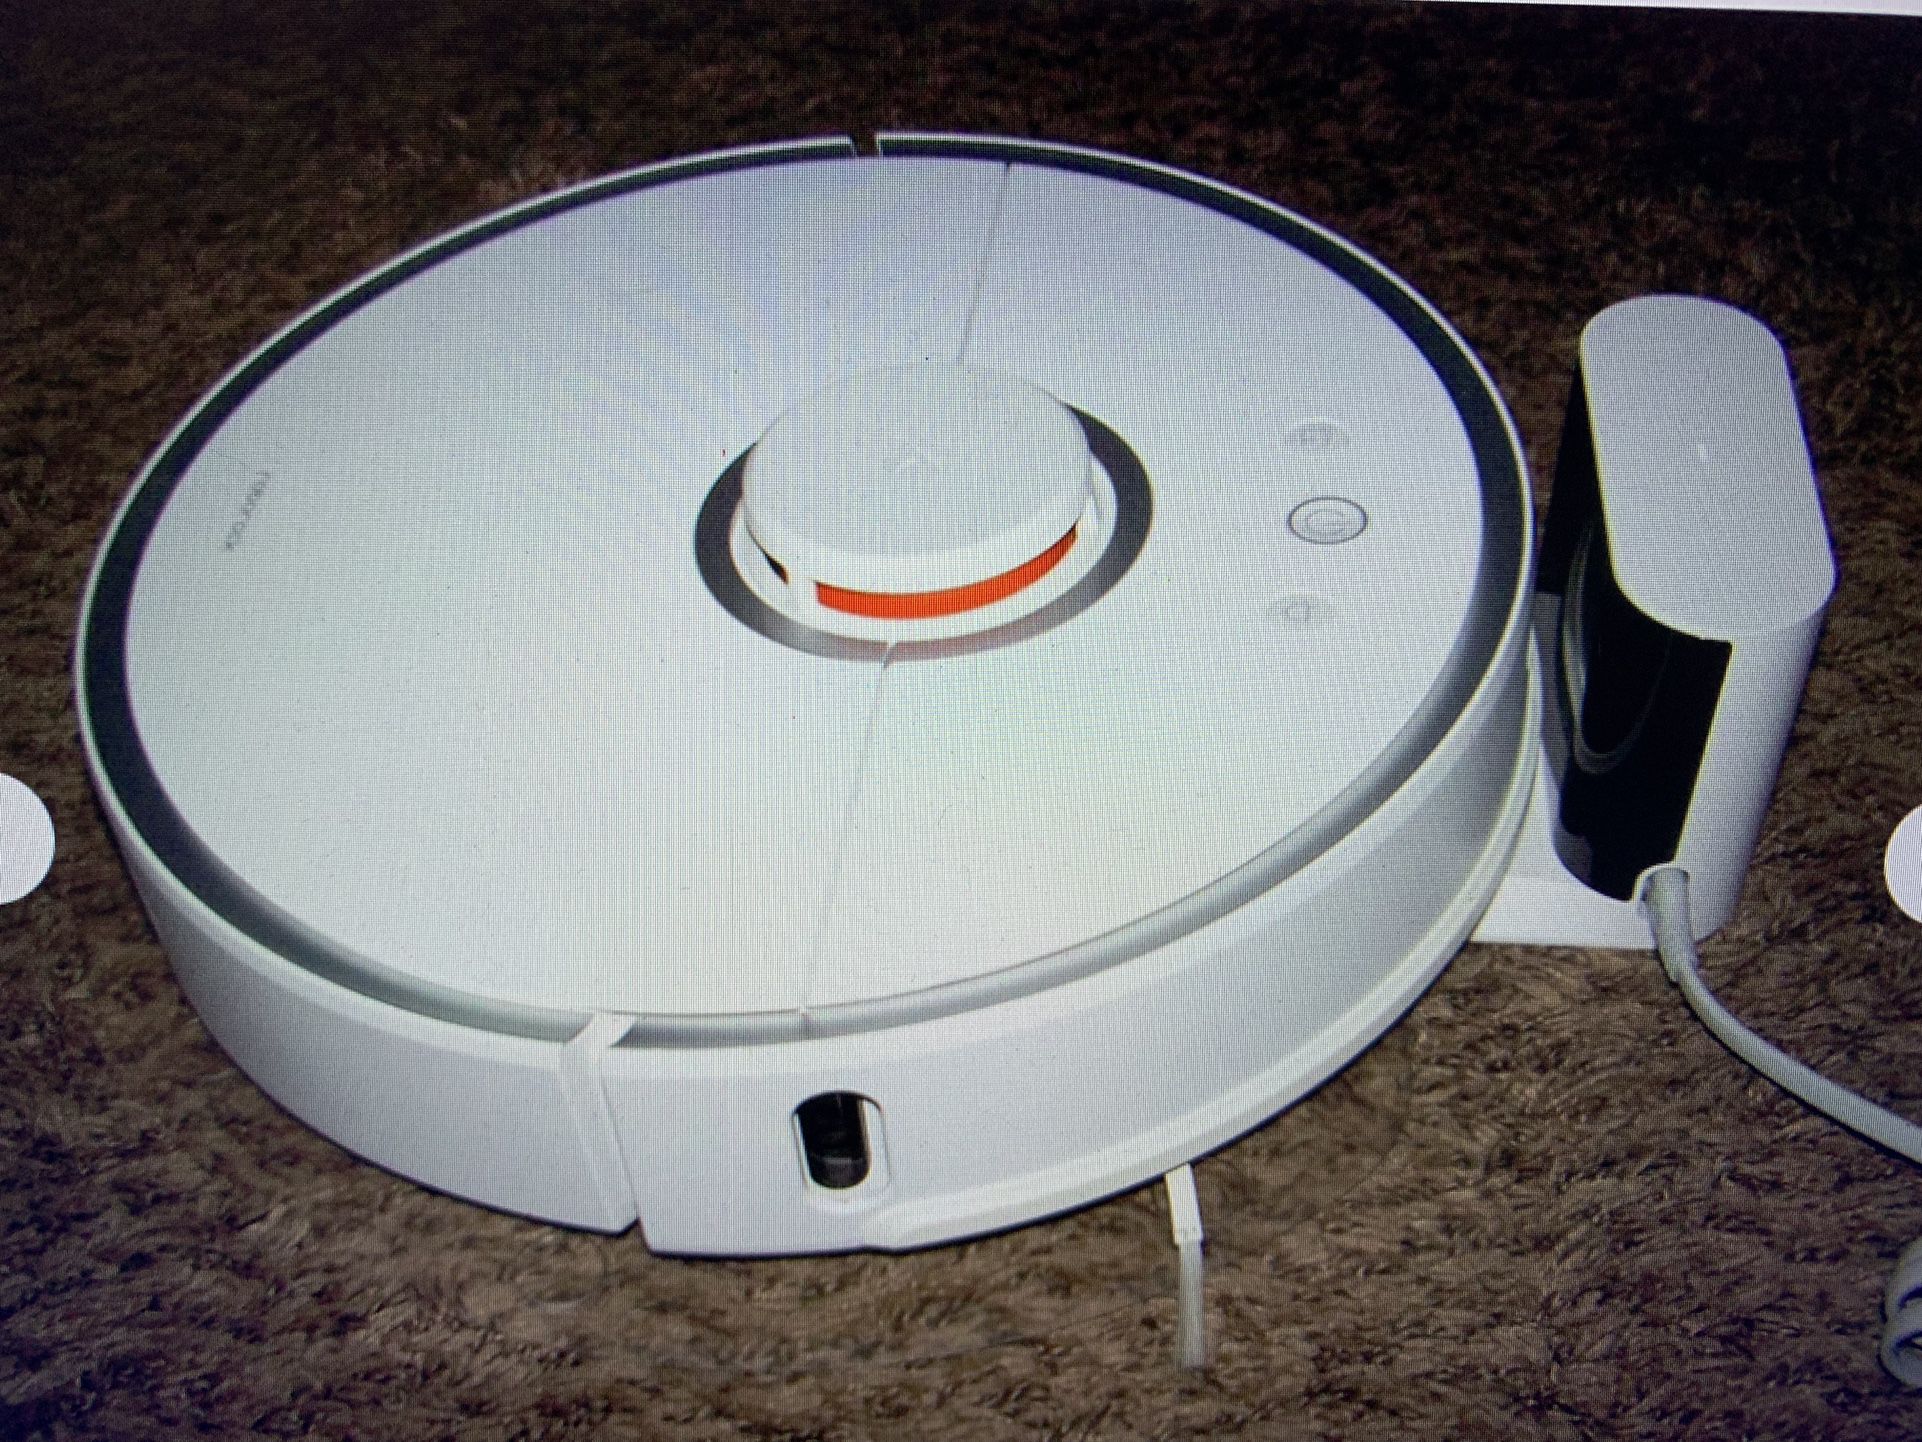 Roborock S5 Robotic Vacuum And Mop Cleaner White (s501-01)